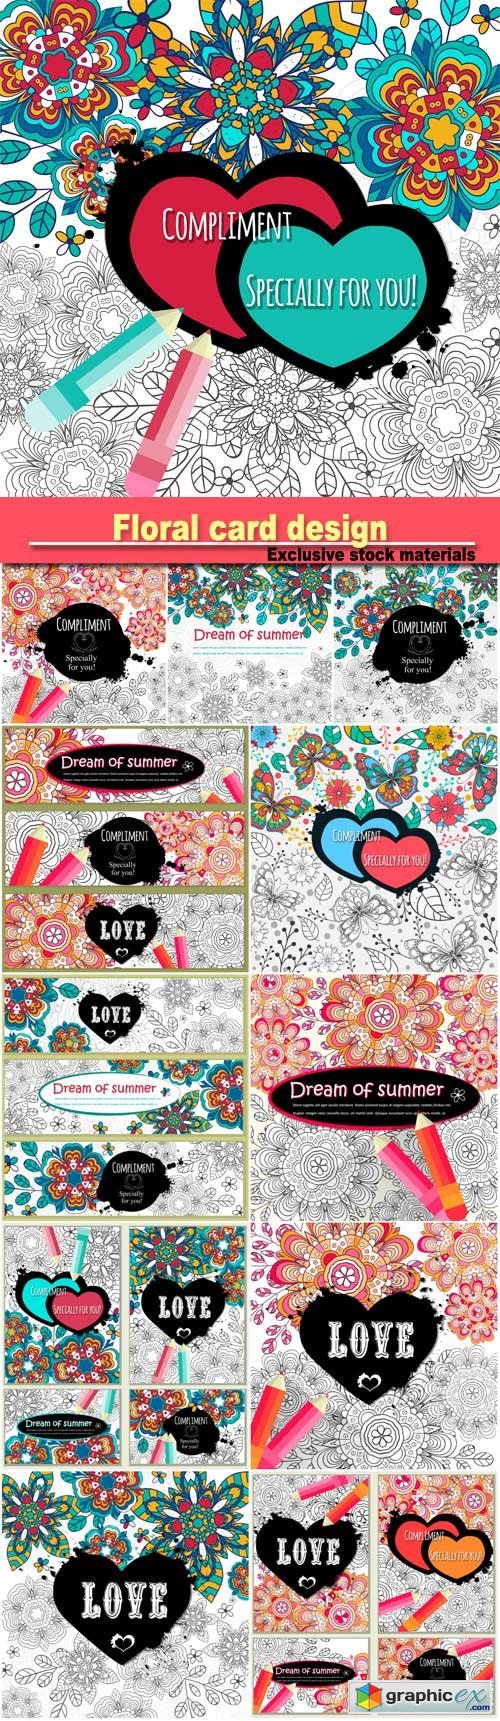 Floral card design, flowers and leaf doodle elements, vector decorative invitation